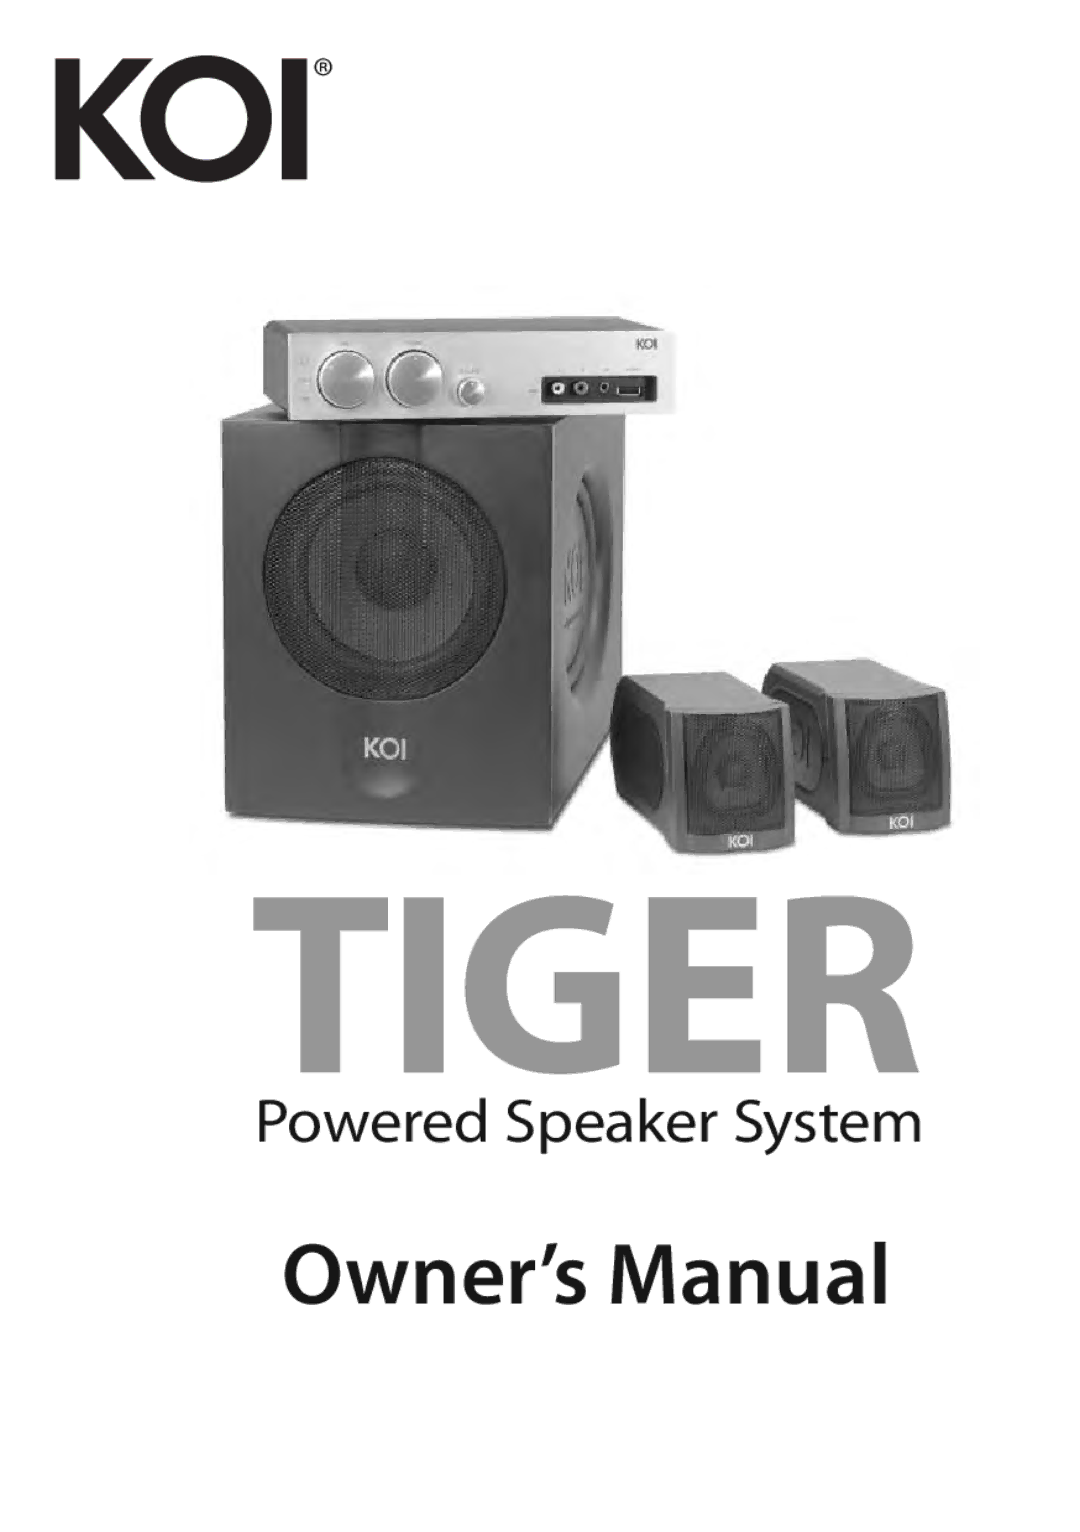 KOI TIGER Powered Speaker System manual Tiger 